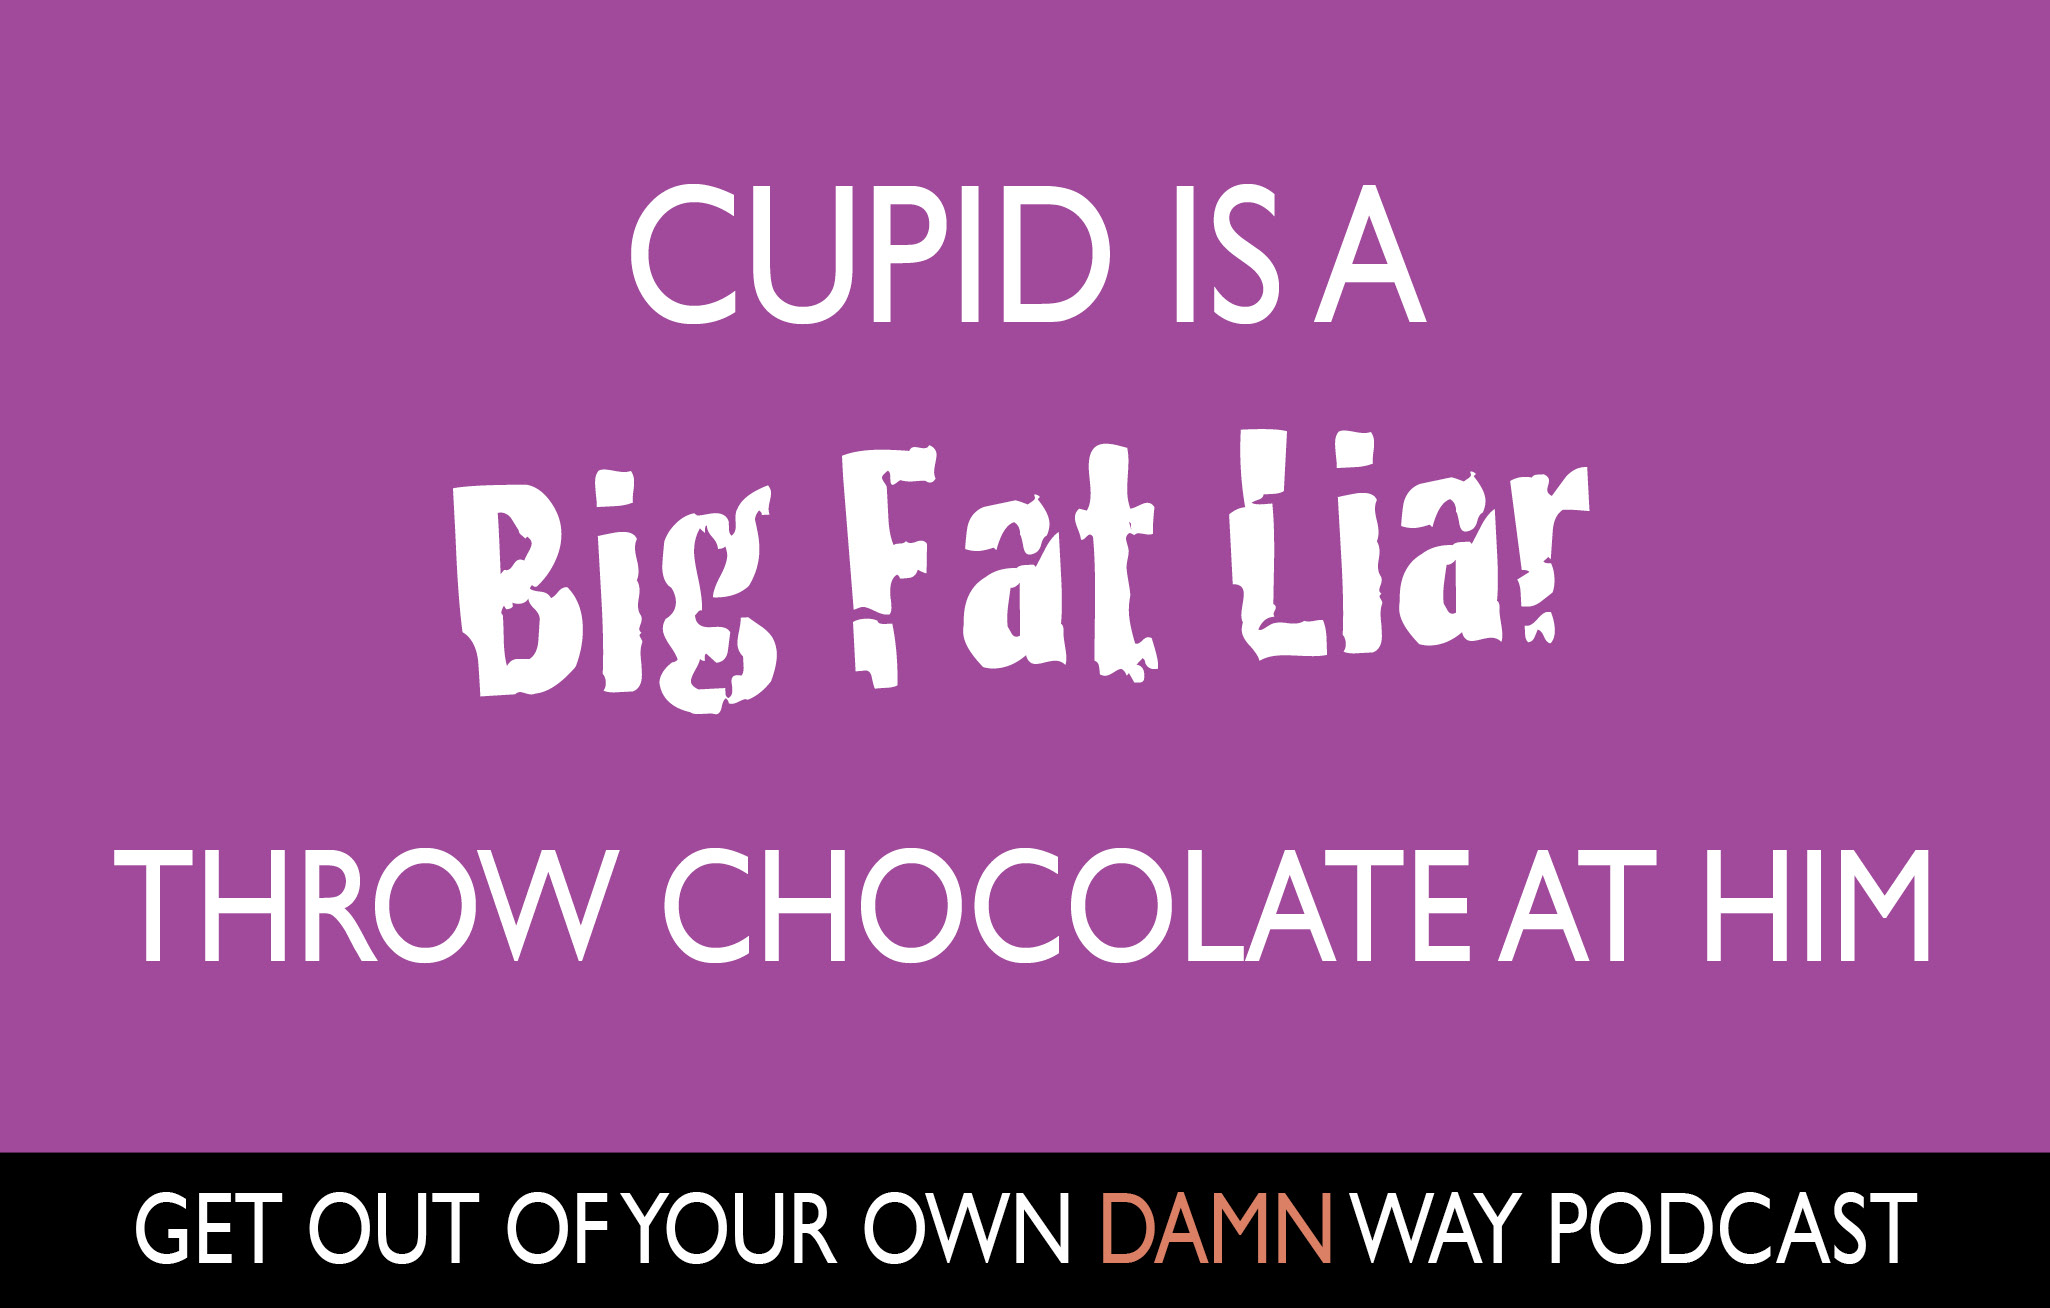 Cupid is a Big Fat Liar, Throw Chocolate at Him!